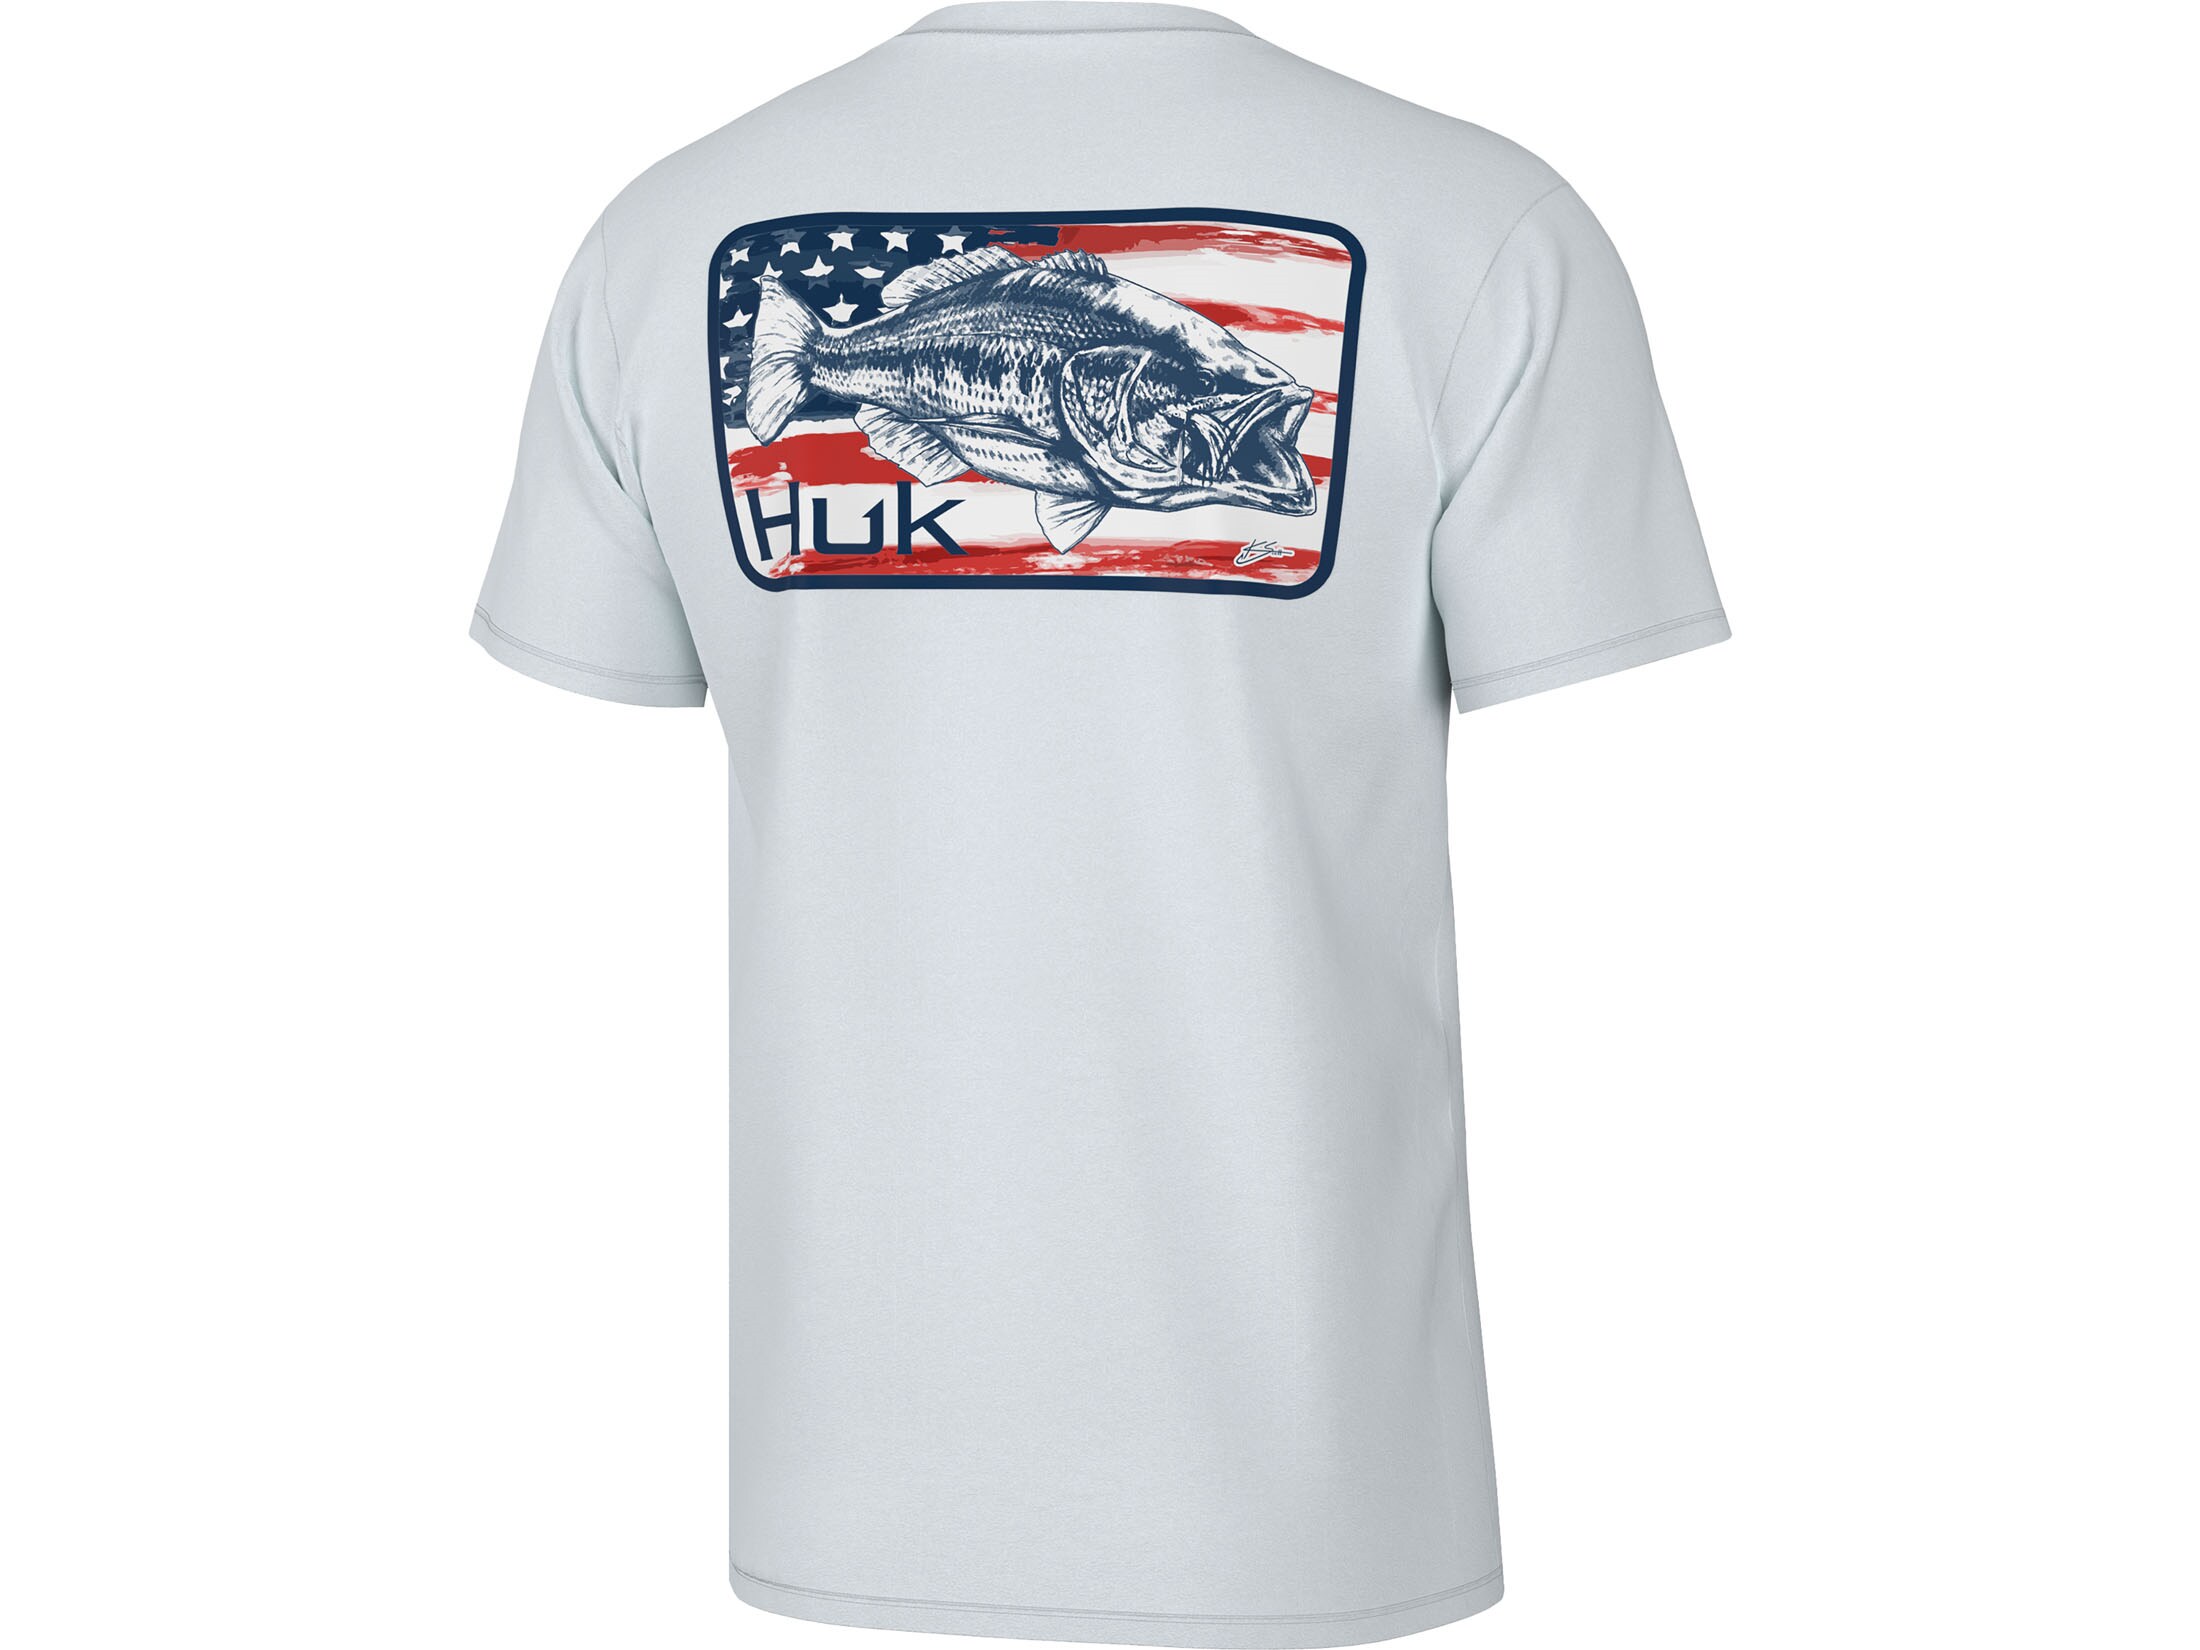 Huk Men's KC Painted Stripes T-Shirt White 2XL